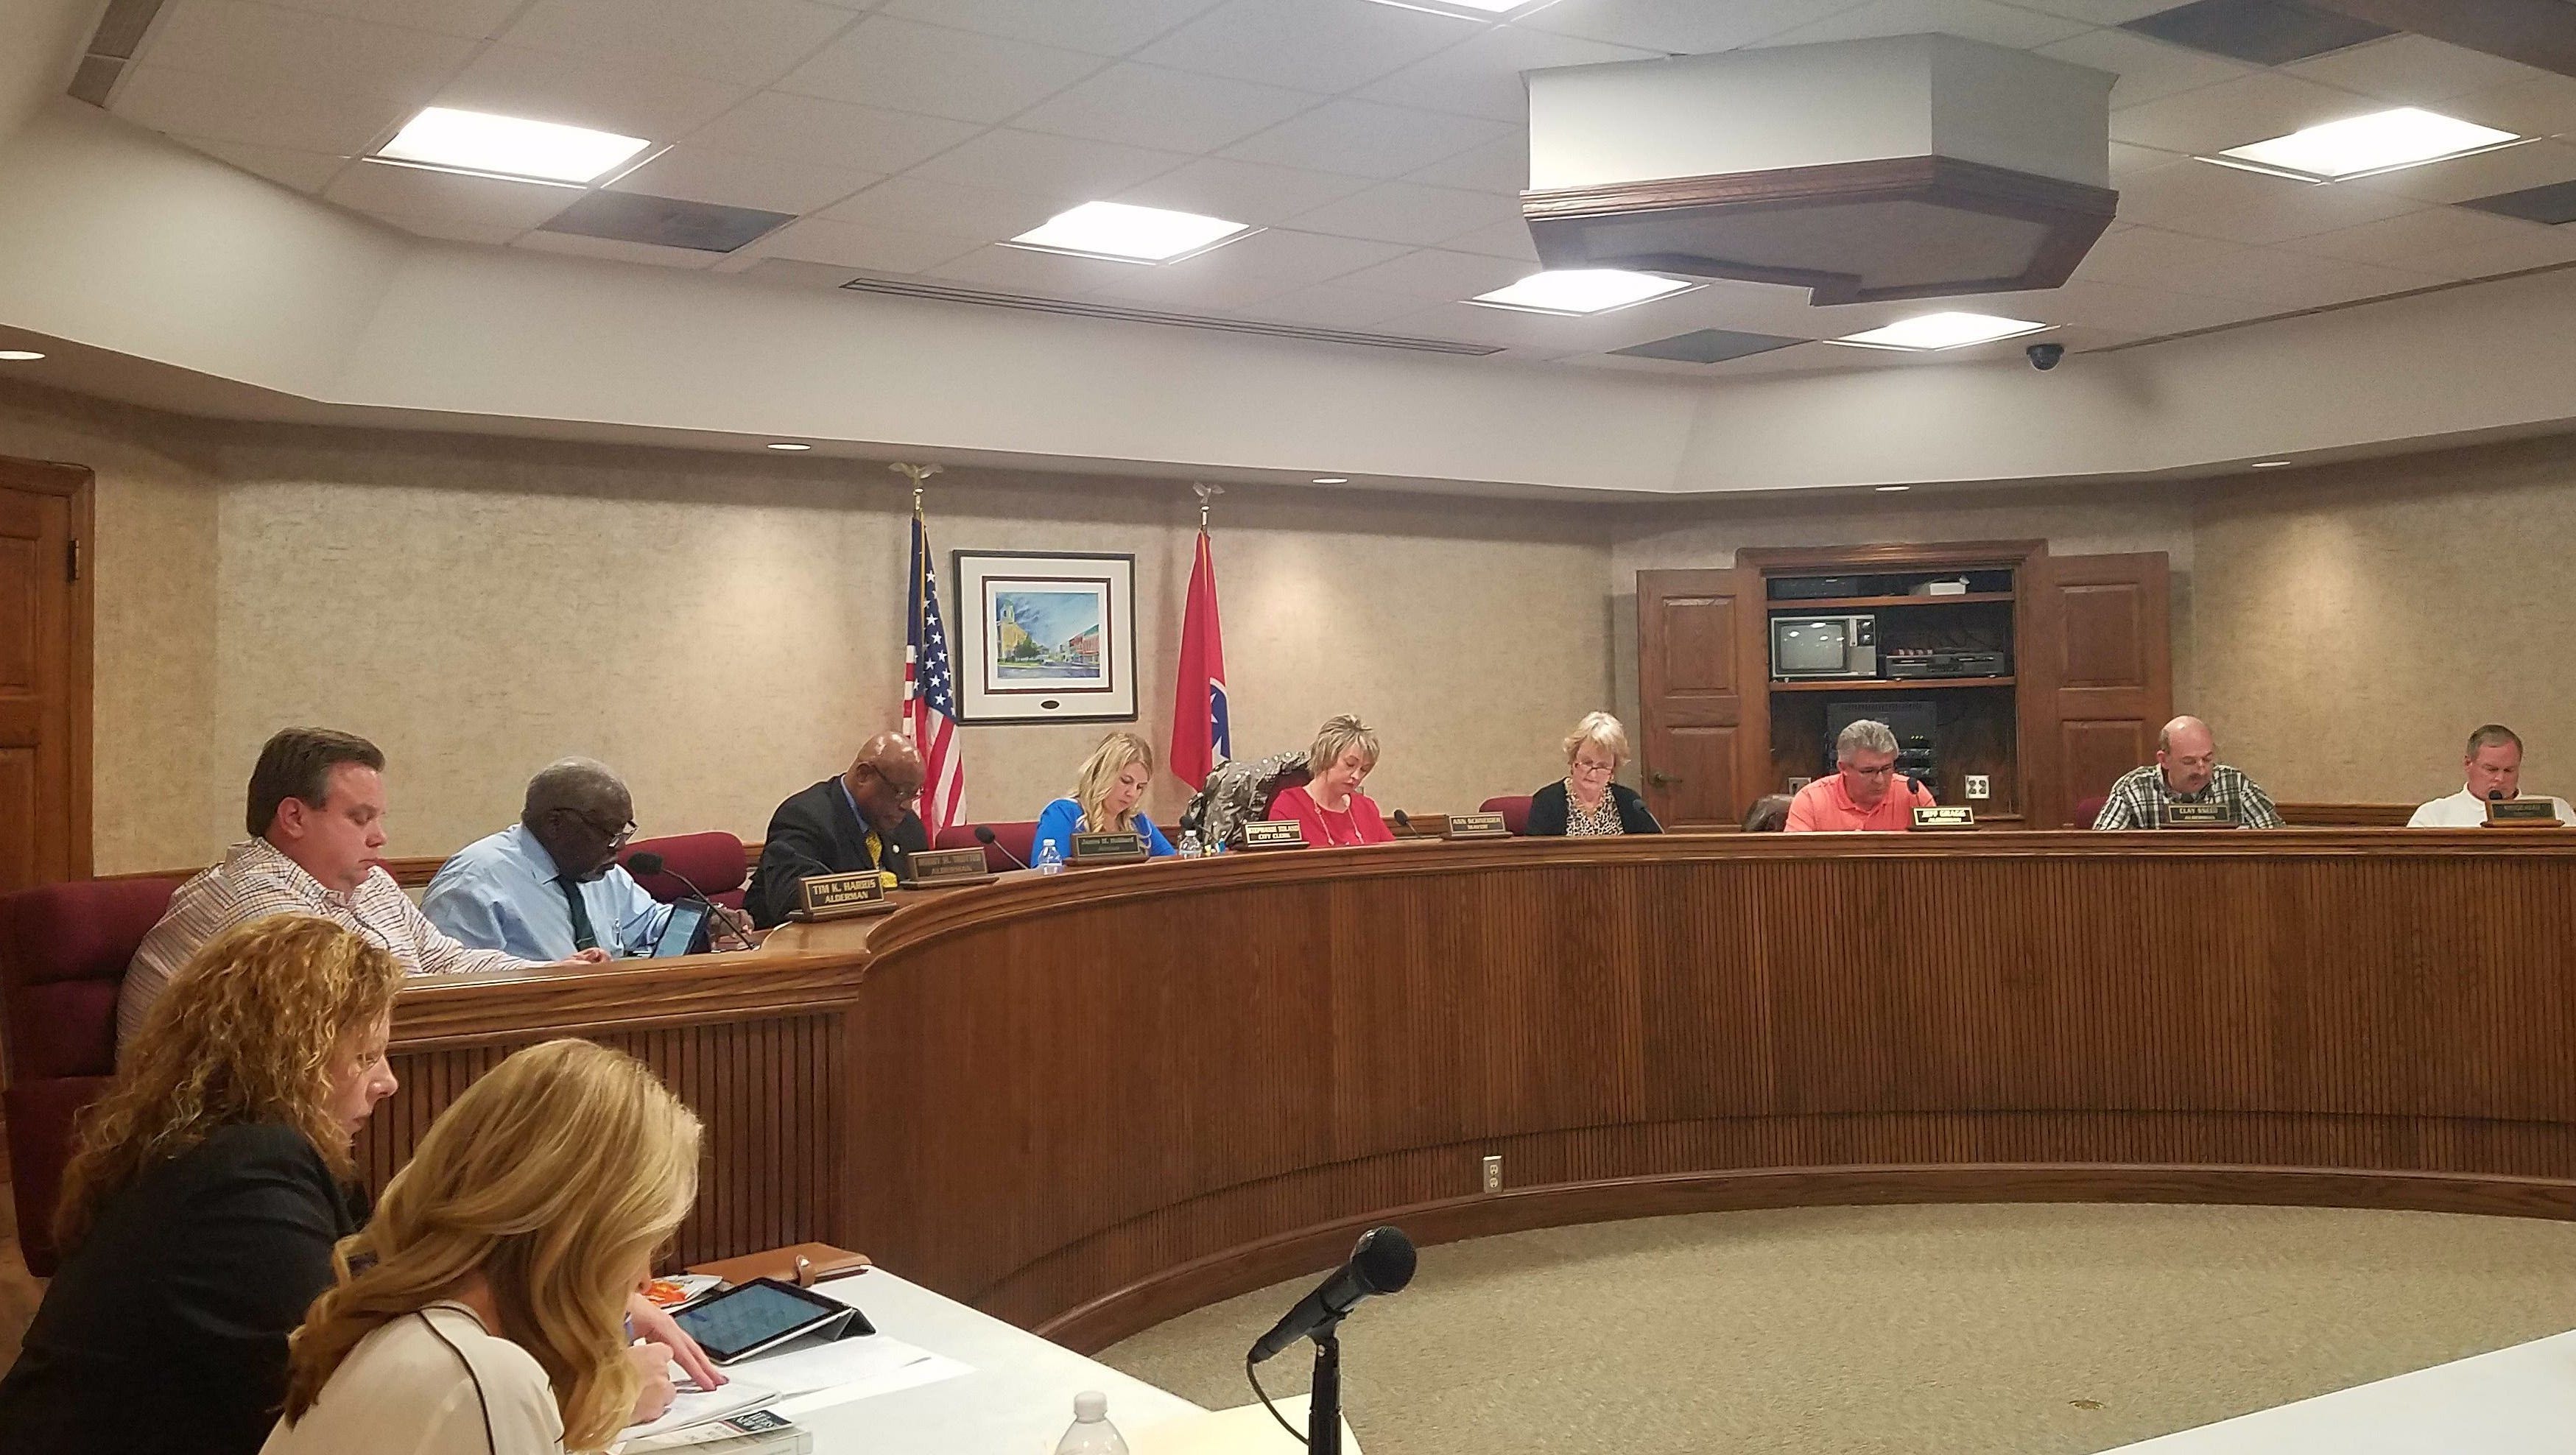 Springfield alderman: Budget cuts 'targeted minorities'